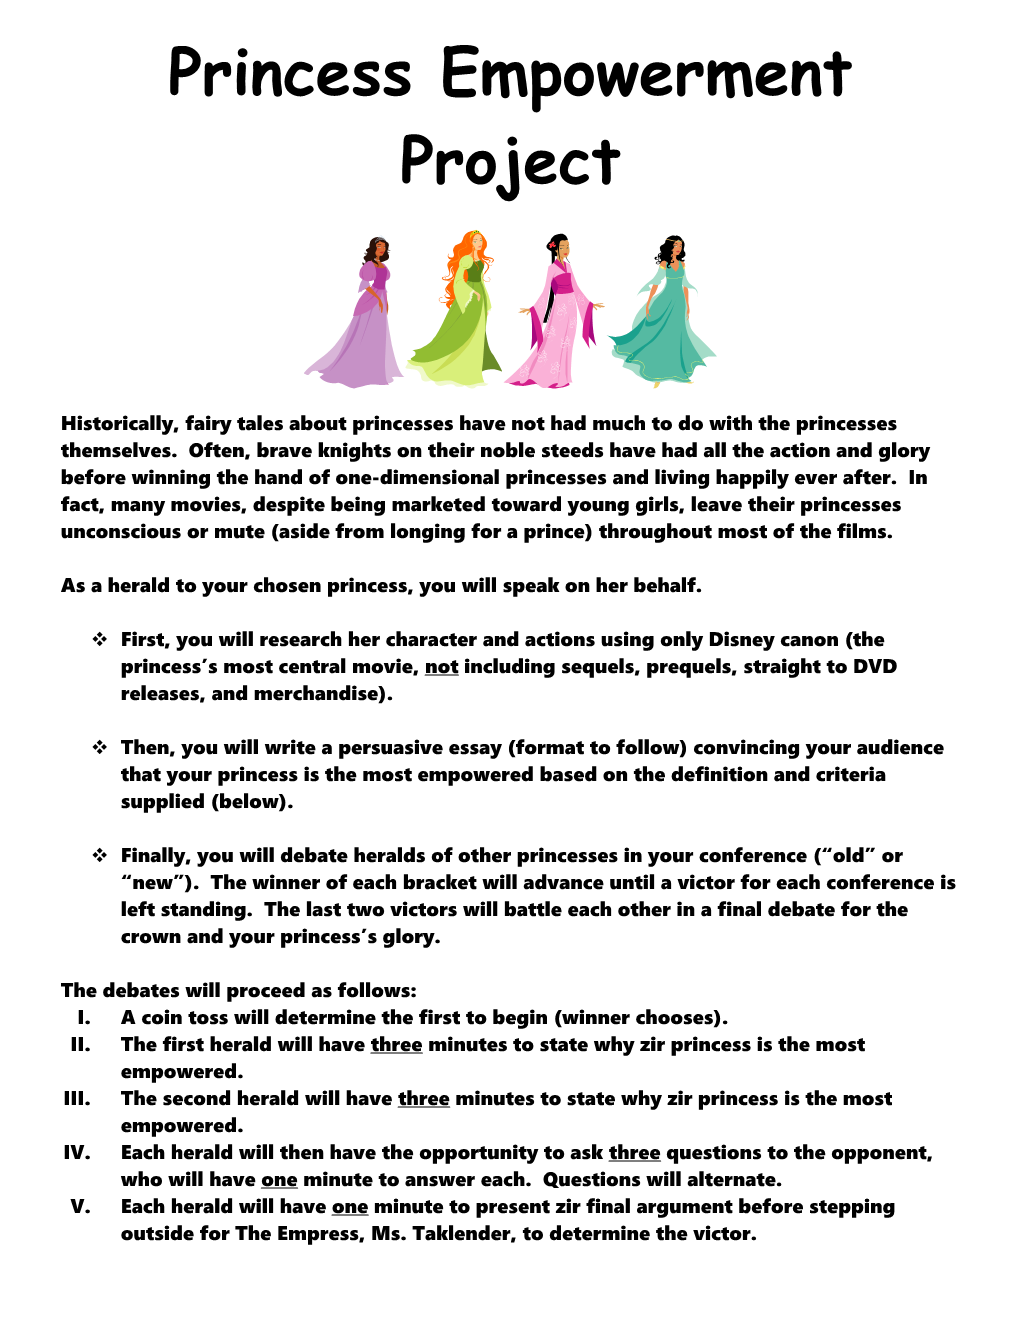 Princess Empowerment Project